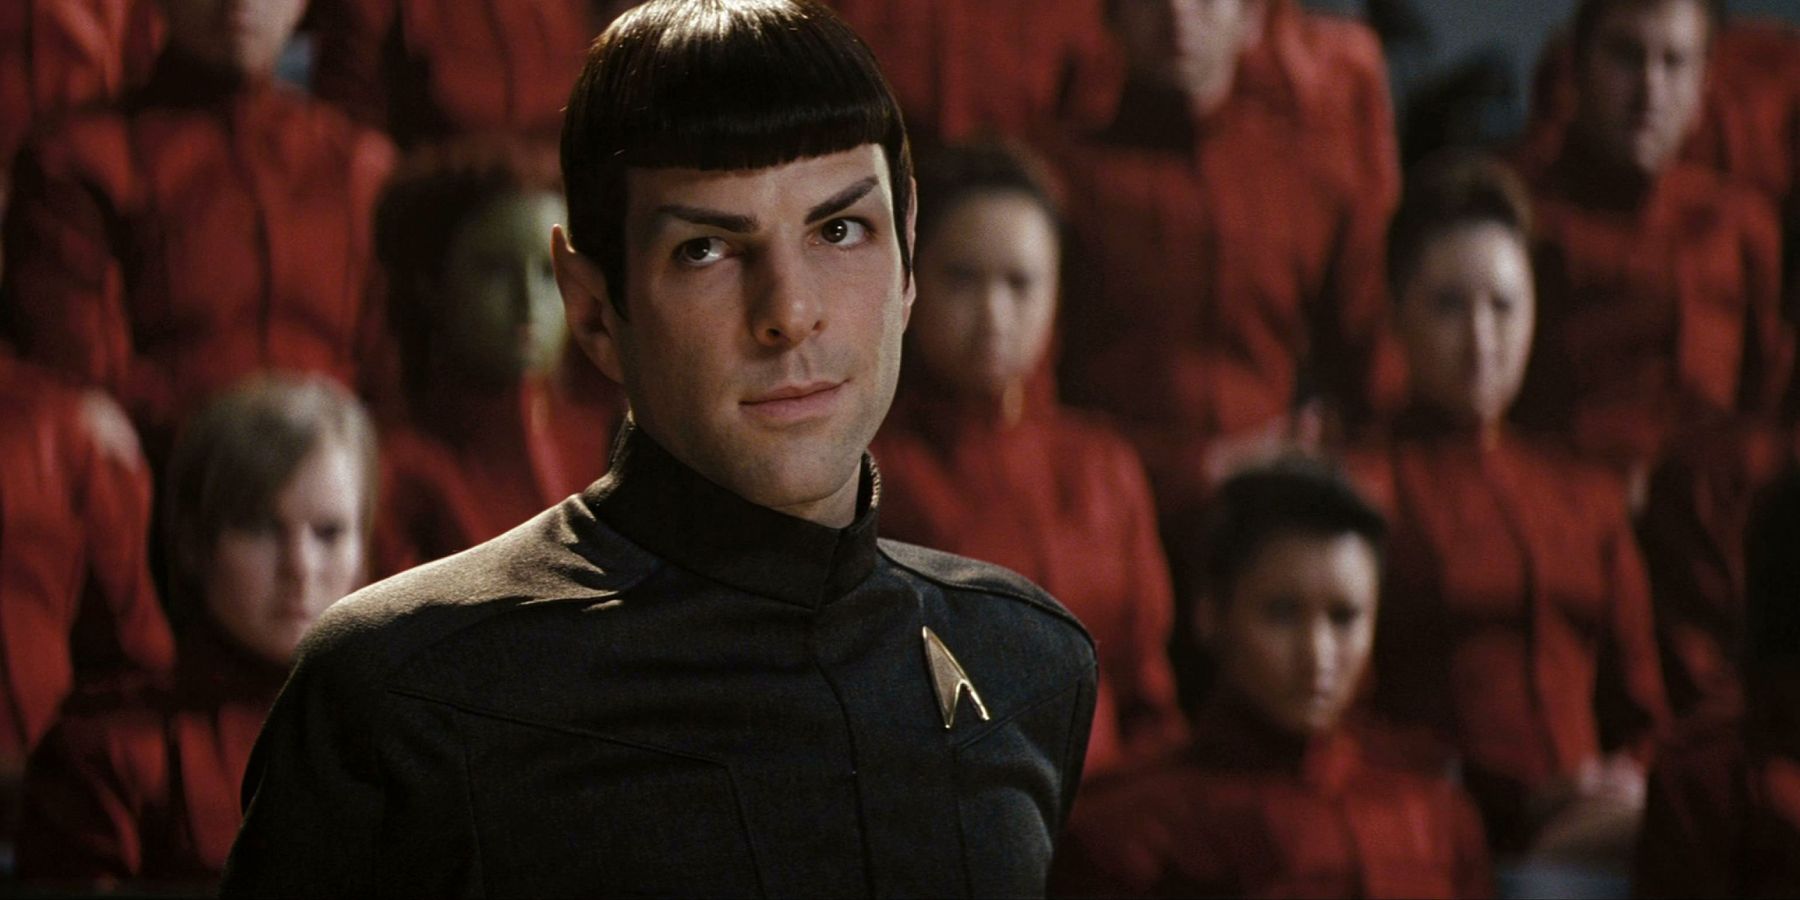 Zachary Quinto as Spock in Star Trek (2009)